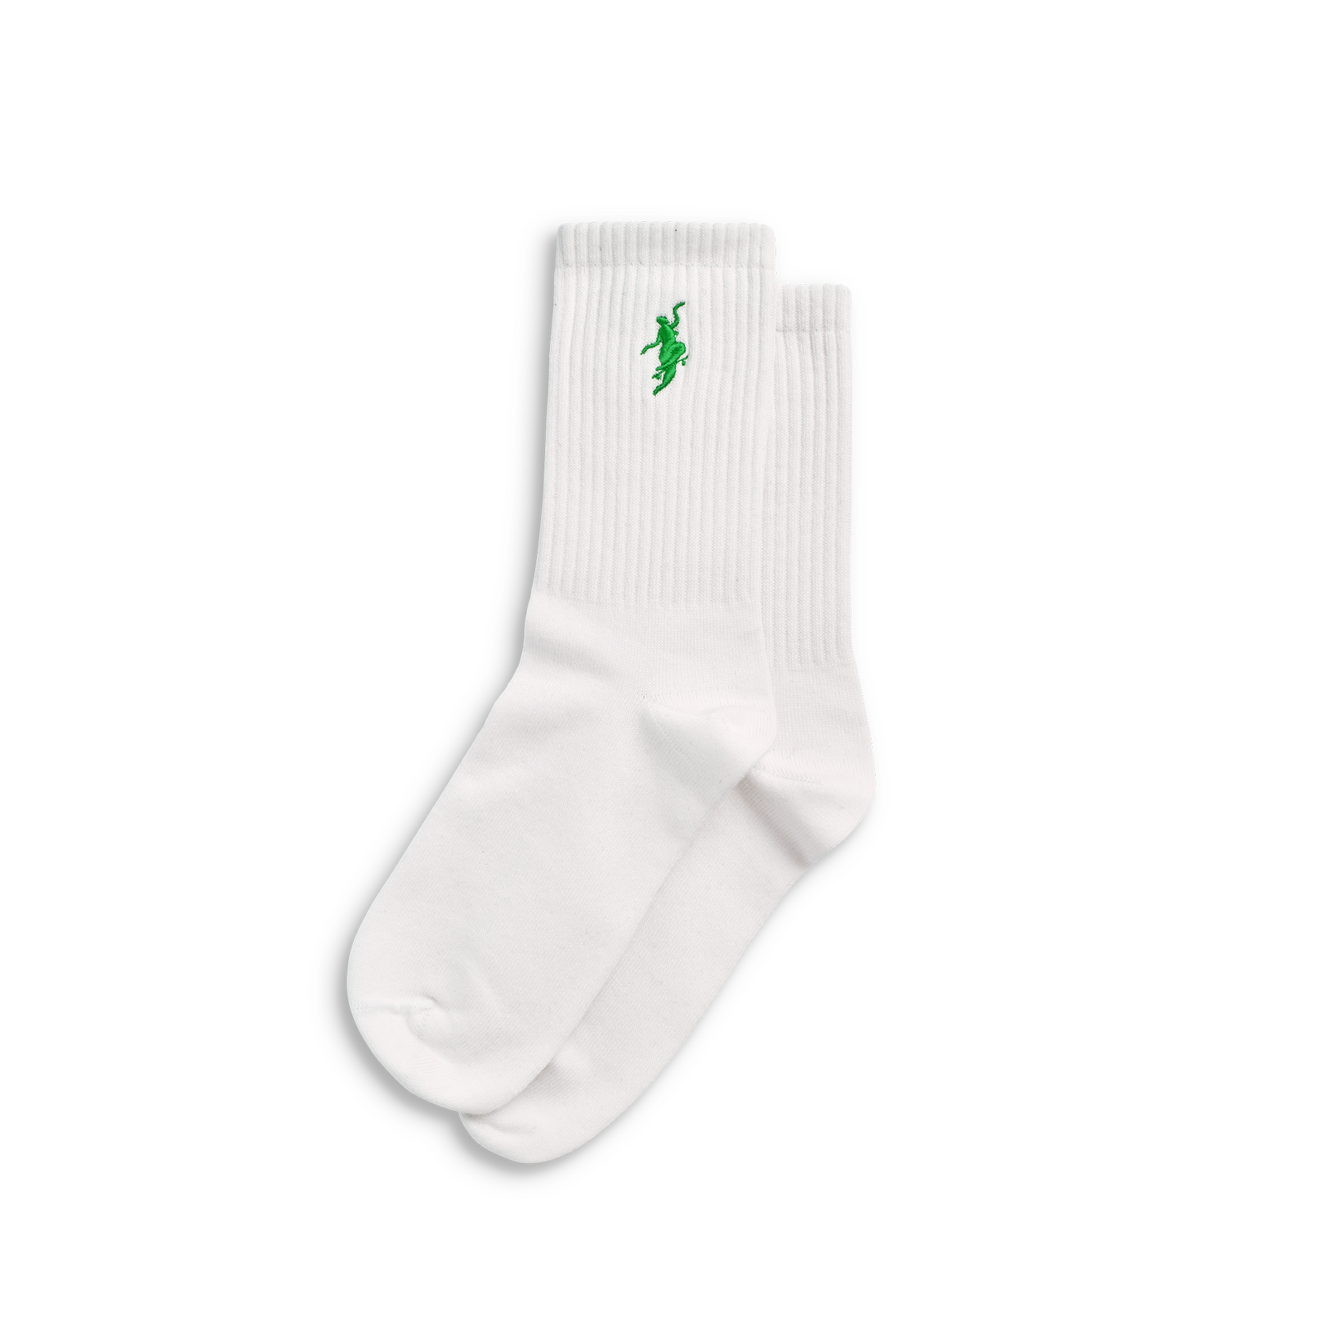 No Comply Socks - White/Green